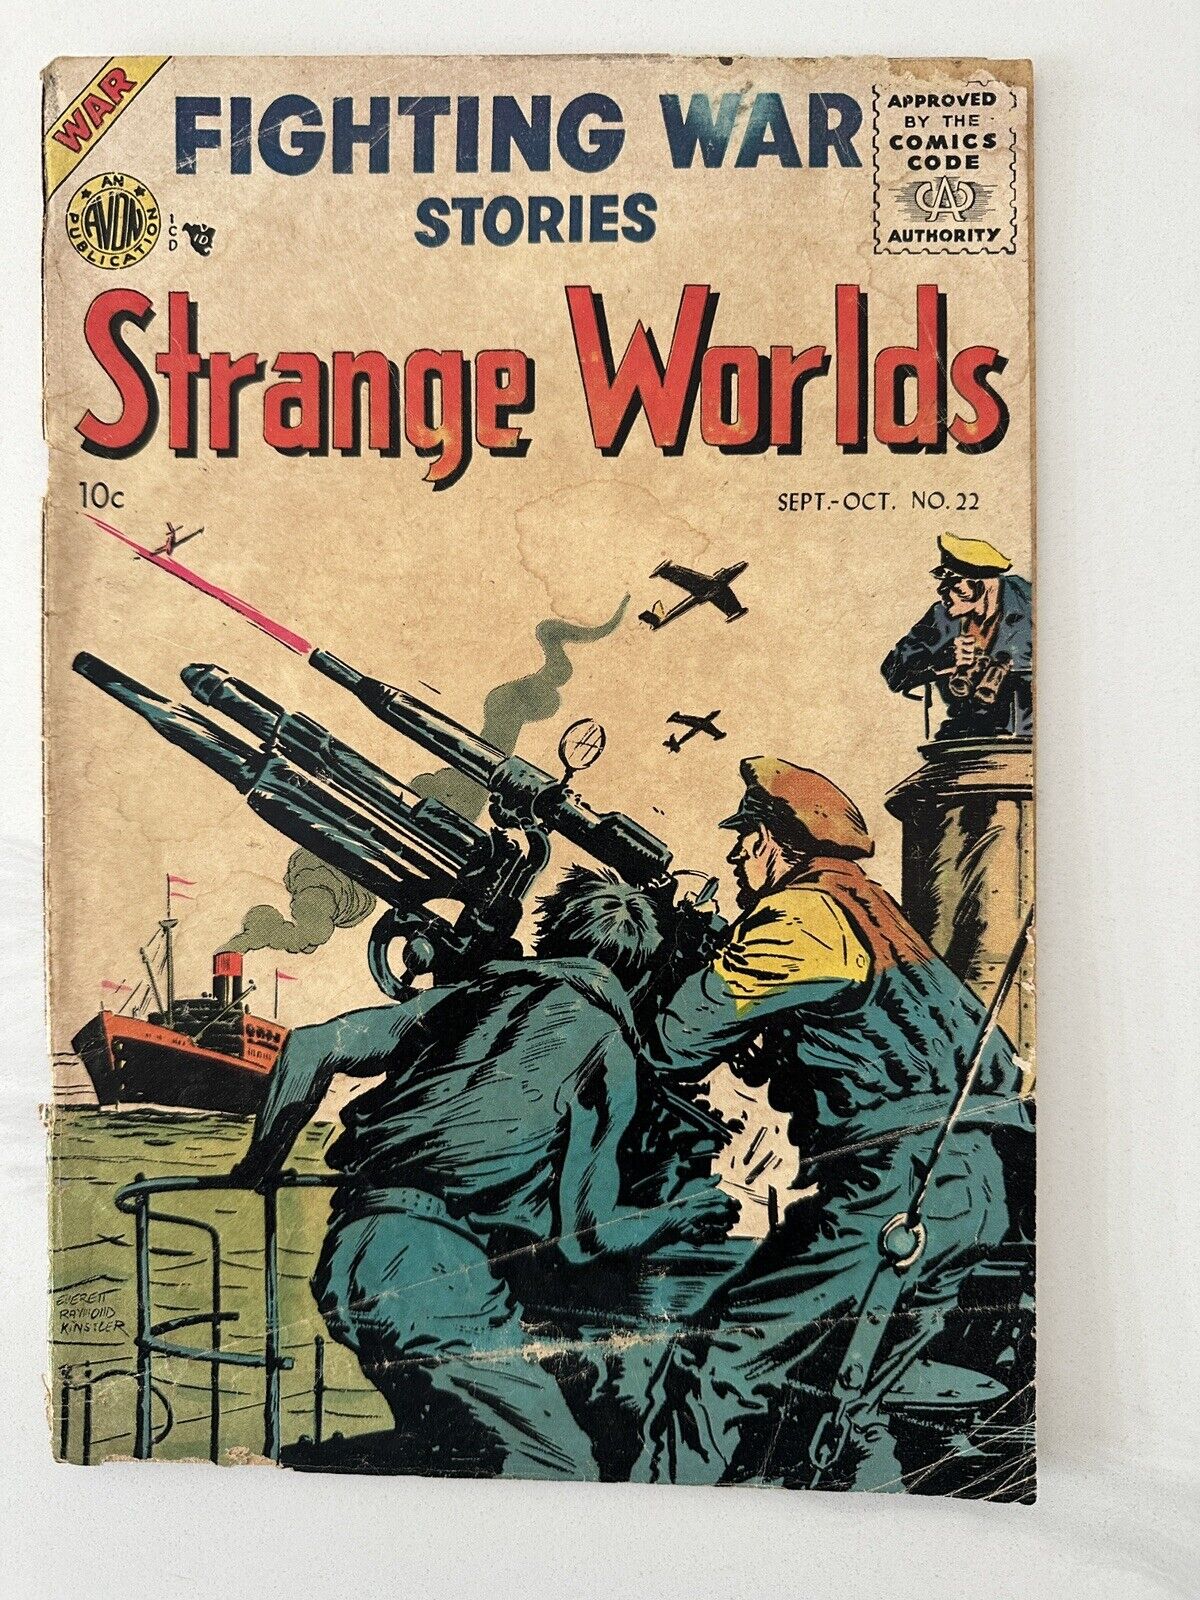 1955 Strange Worlds #22 Fighting Was Stories An Avon Publication 10c Comic